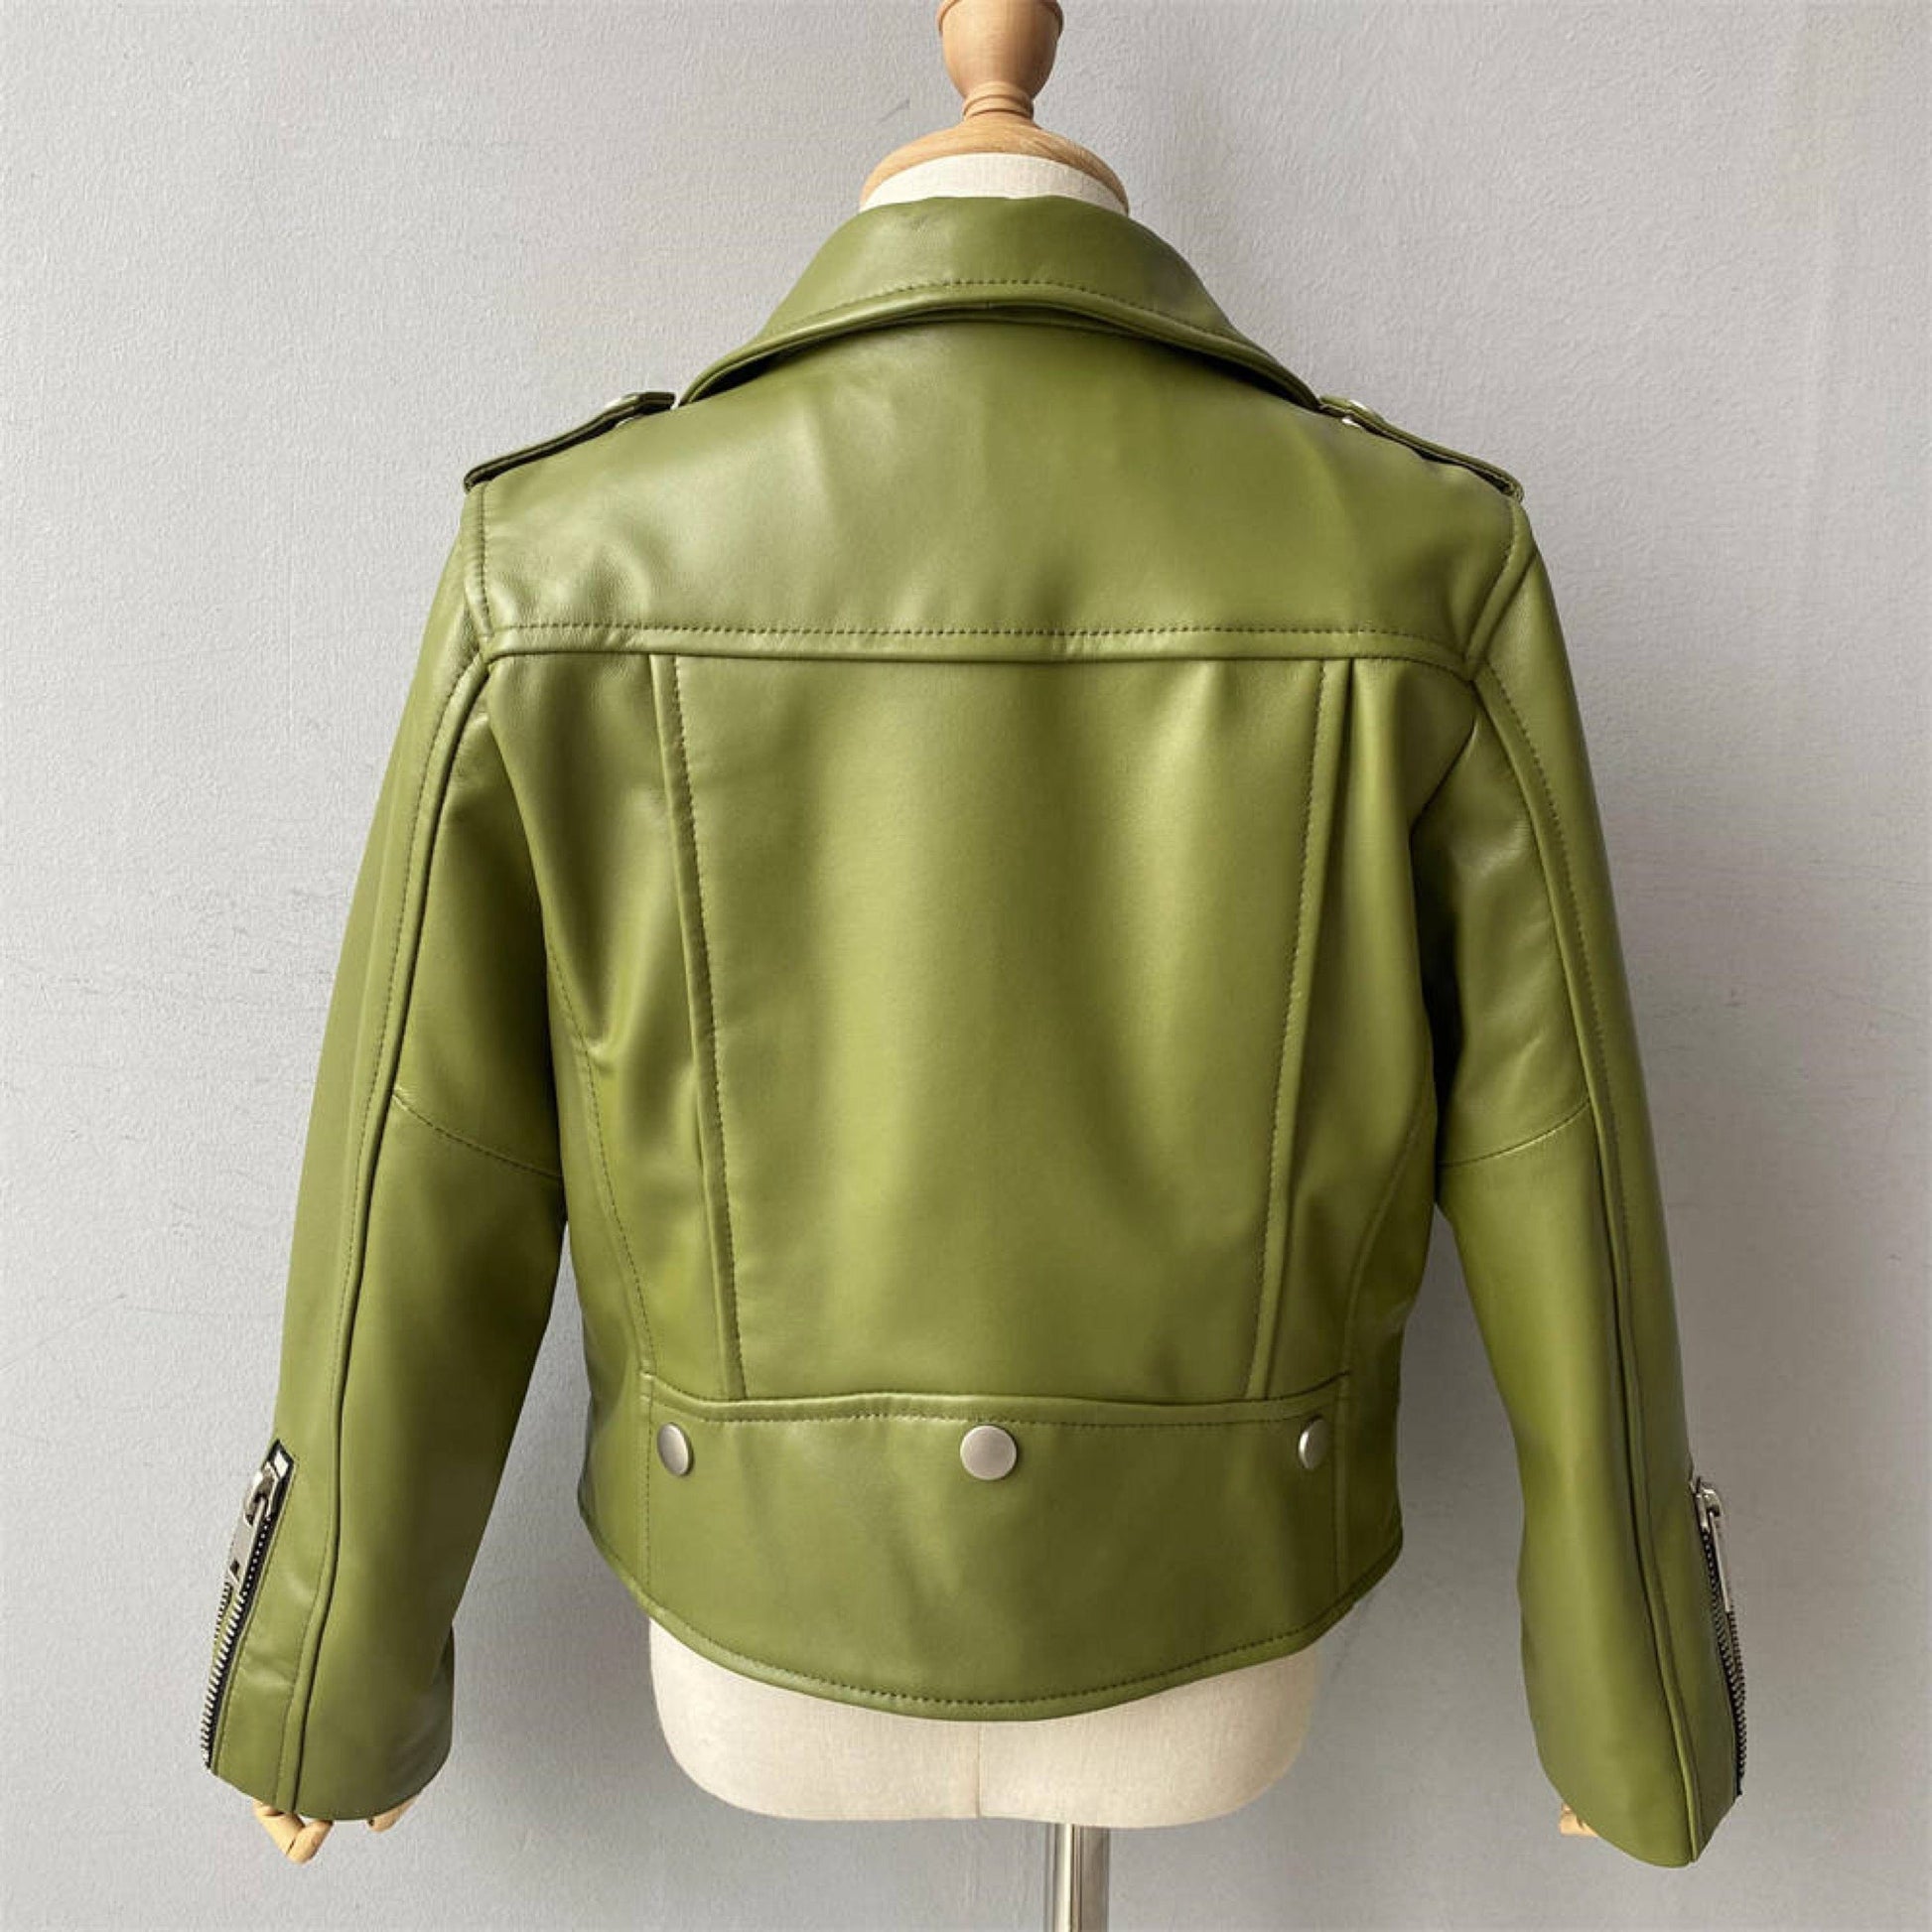 Posh Tomboy coat Army Green XZD Leather Moto Jacket